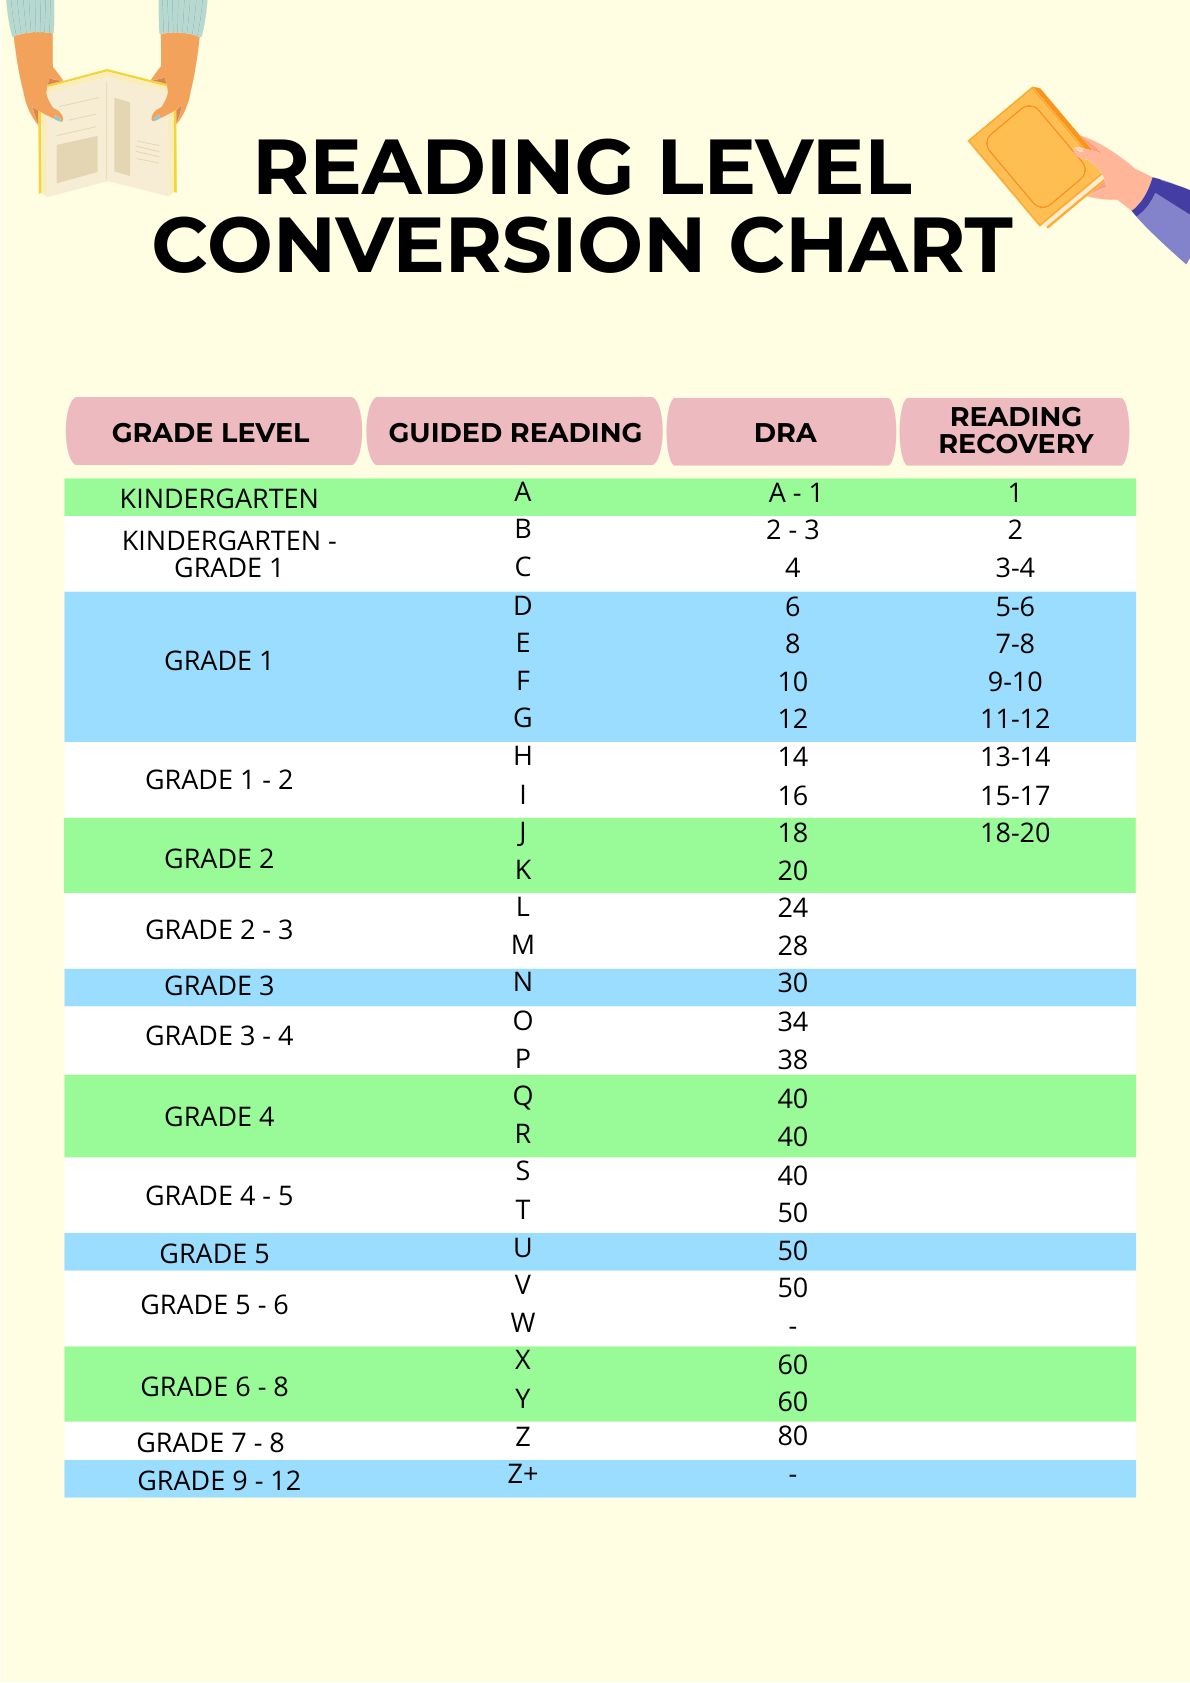 Reading Level Conversion Chart in PDF, Illustrator